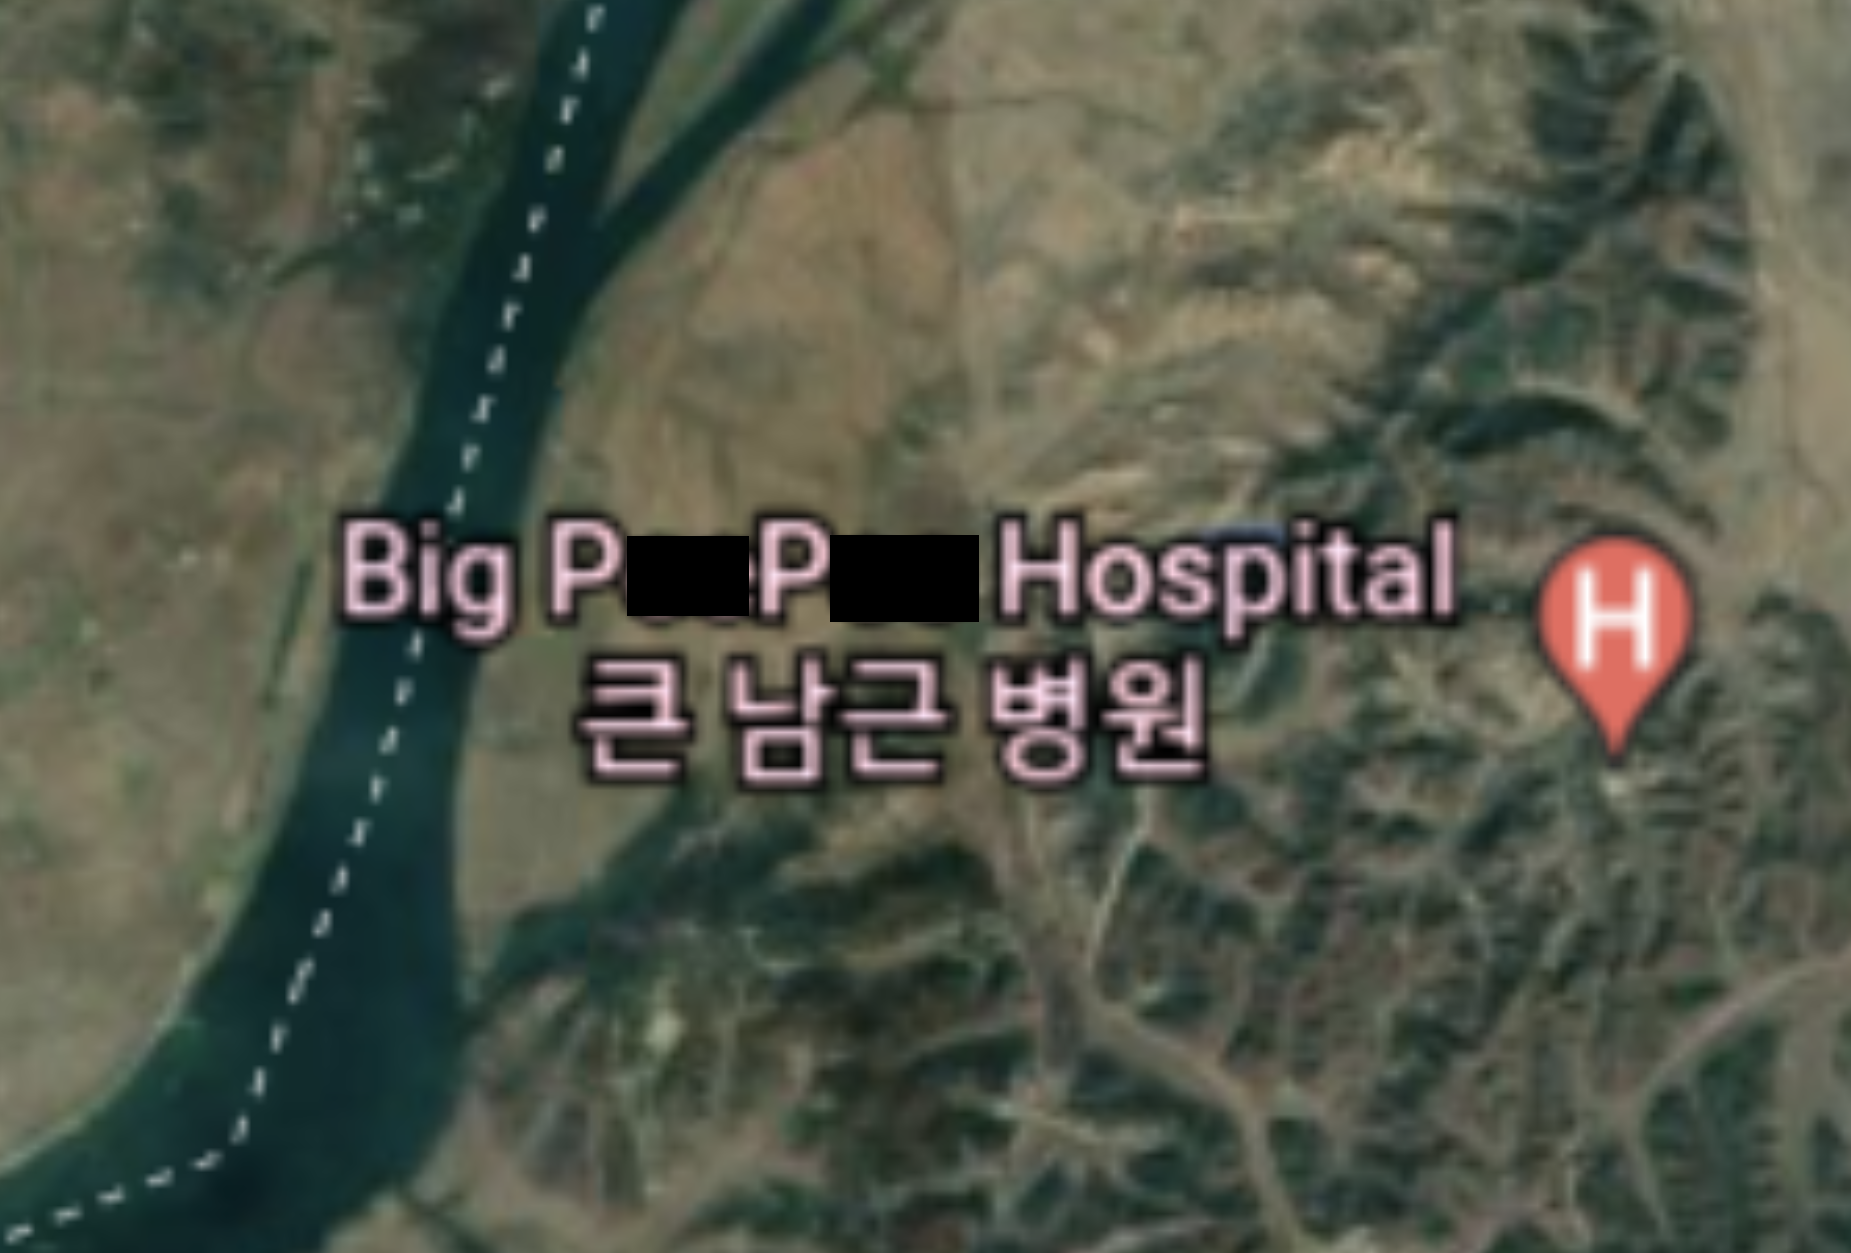 big pee pee hospital north korea - Big P P Hospital H